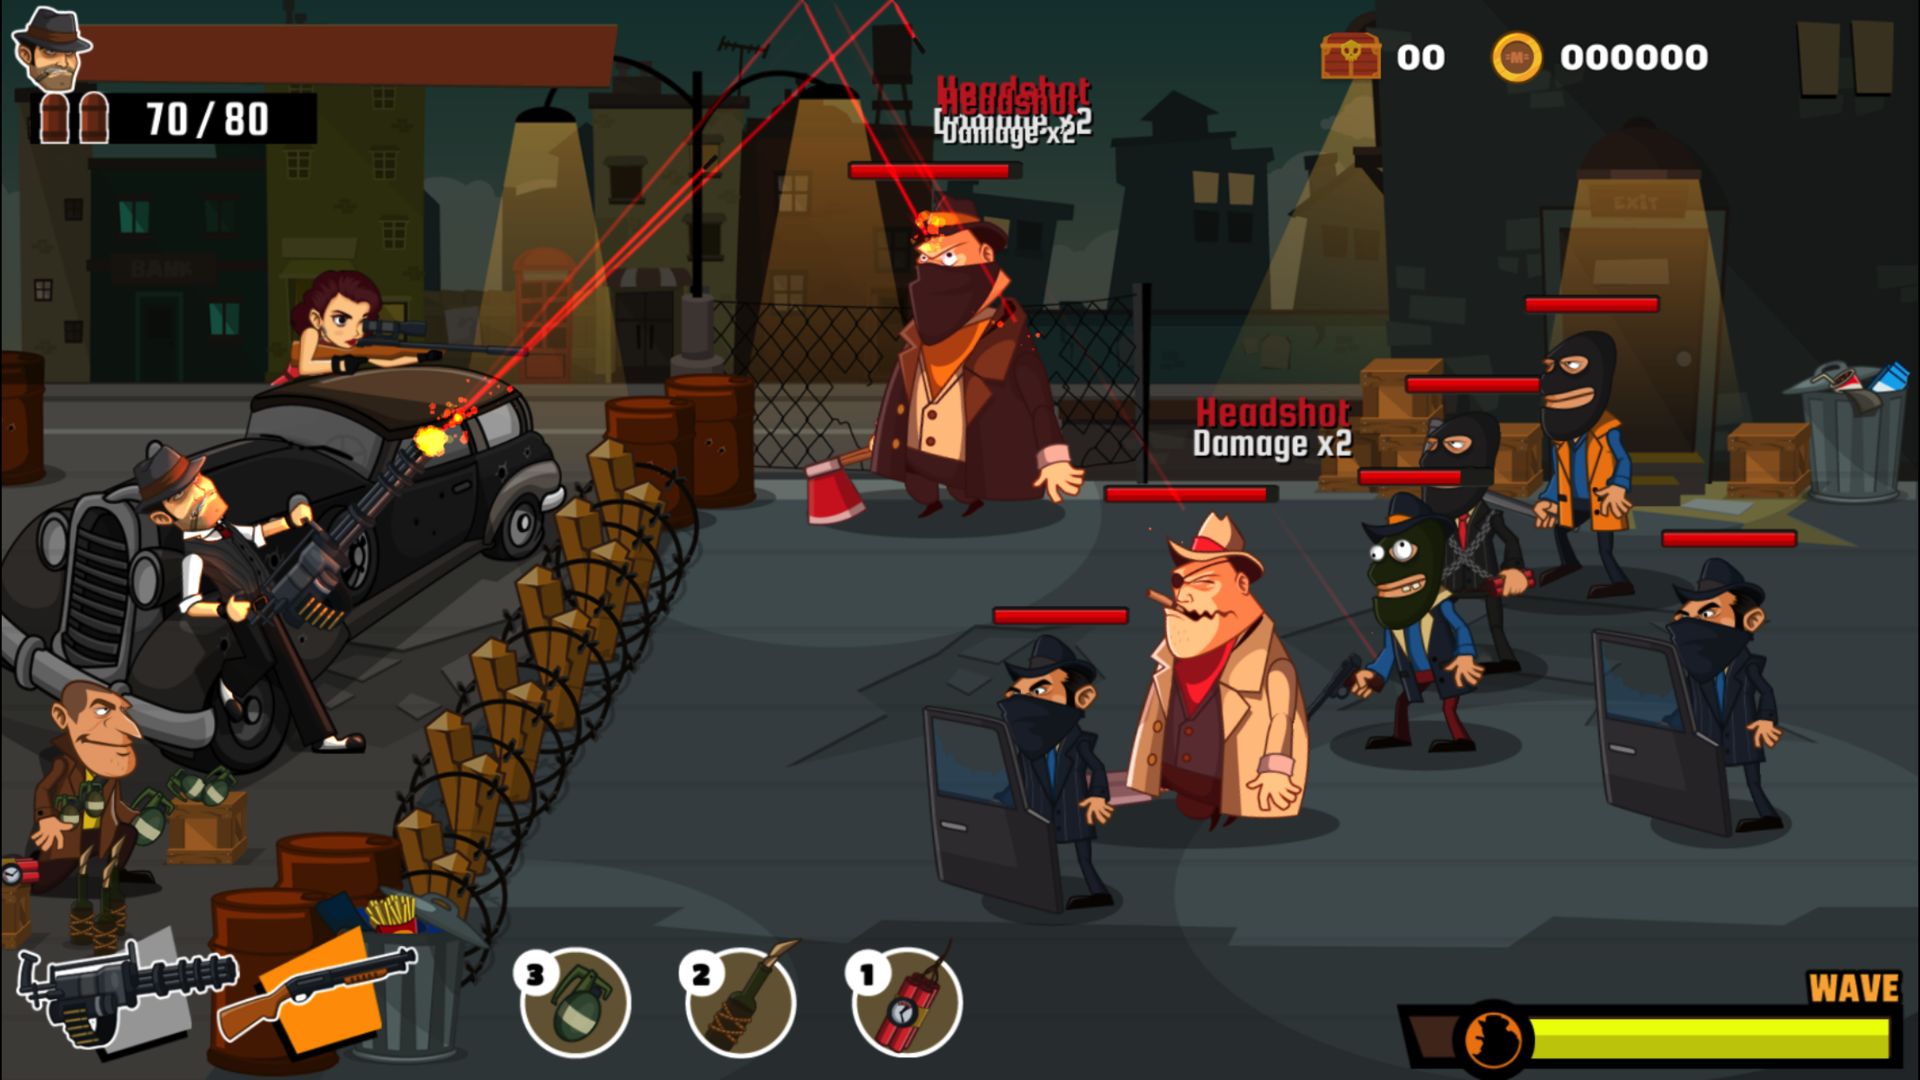 Screenshot of Gangster Wars : Defense